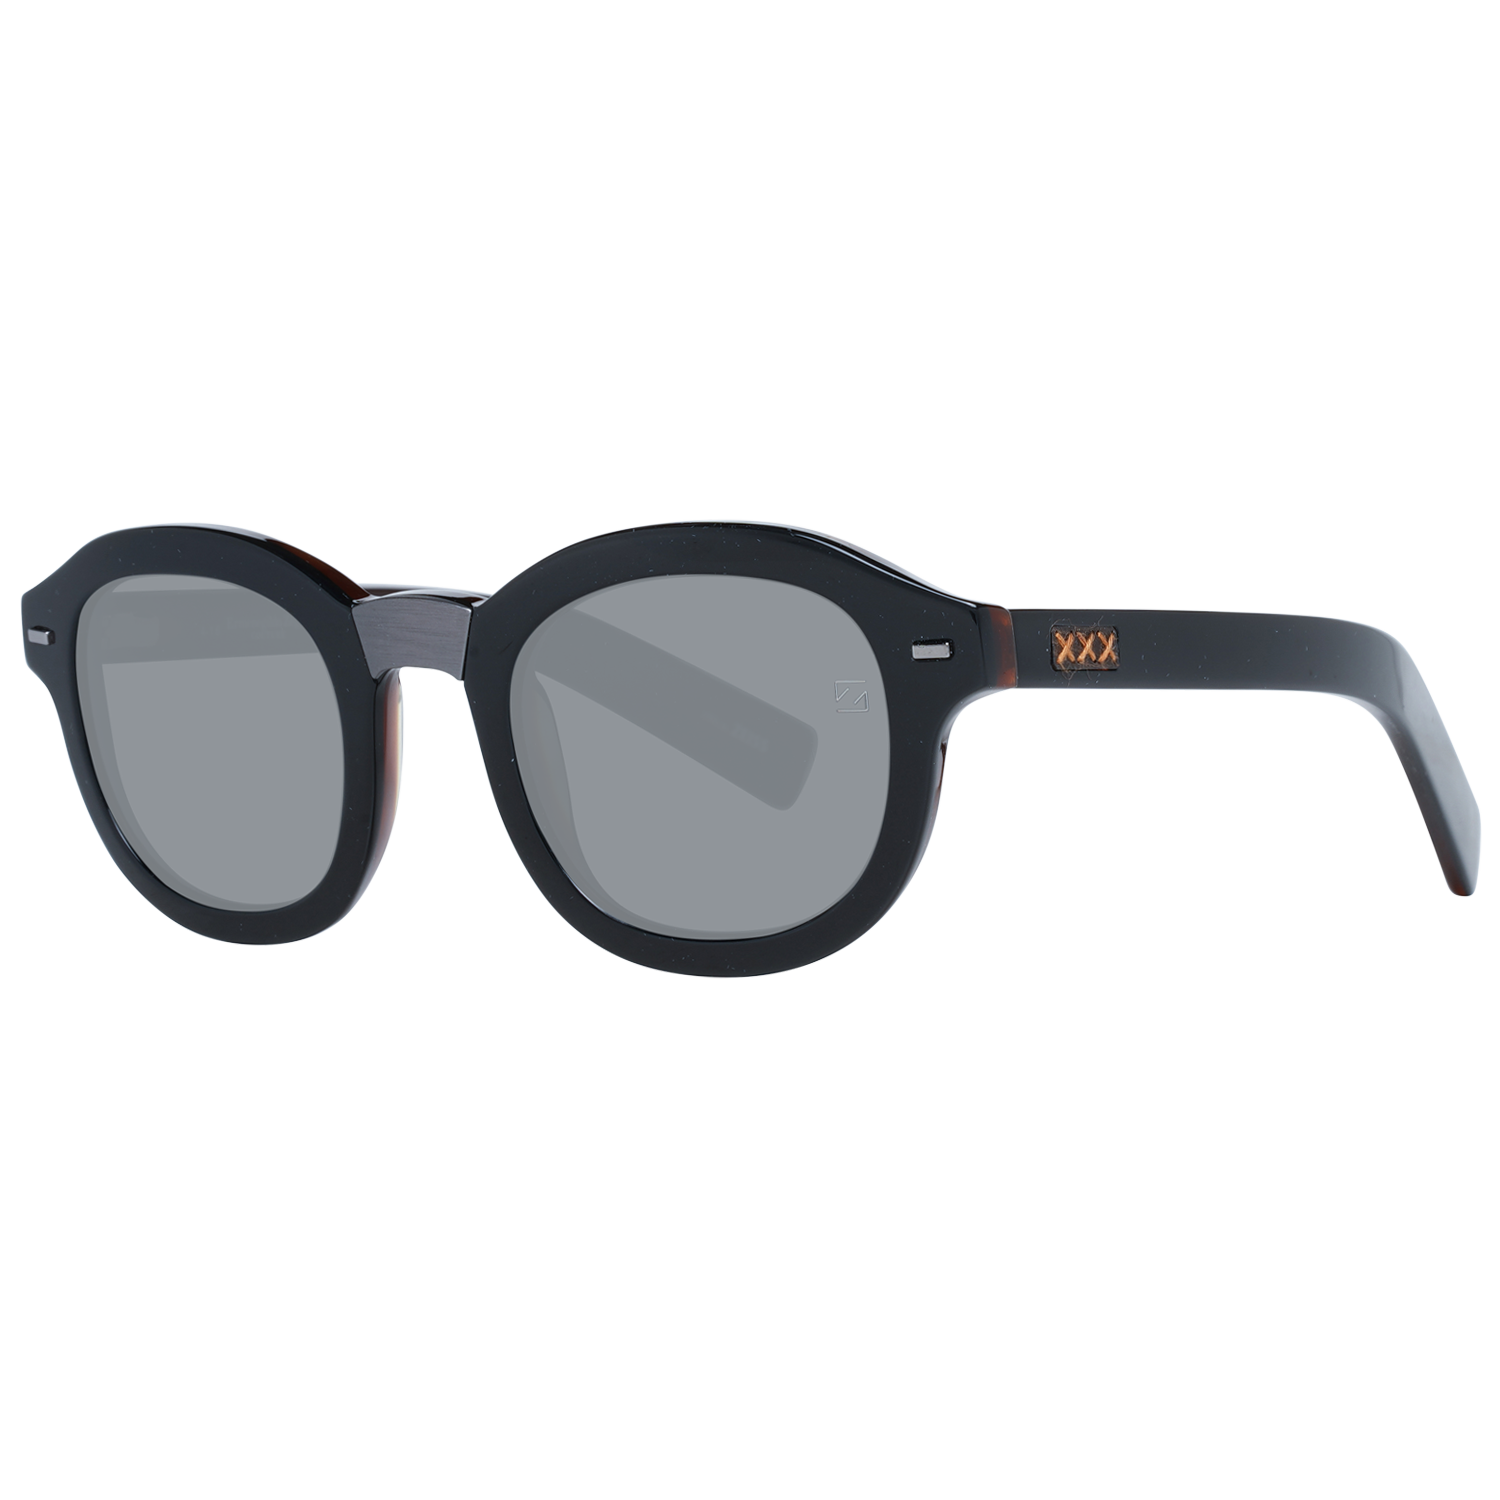 Zegna Couture Sunglasses Zegna Couture Sunglasses ZC0011 47 05A Eyeglasses Eyewear UK USA Australia 